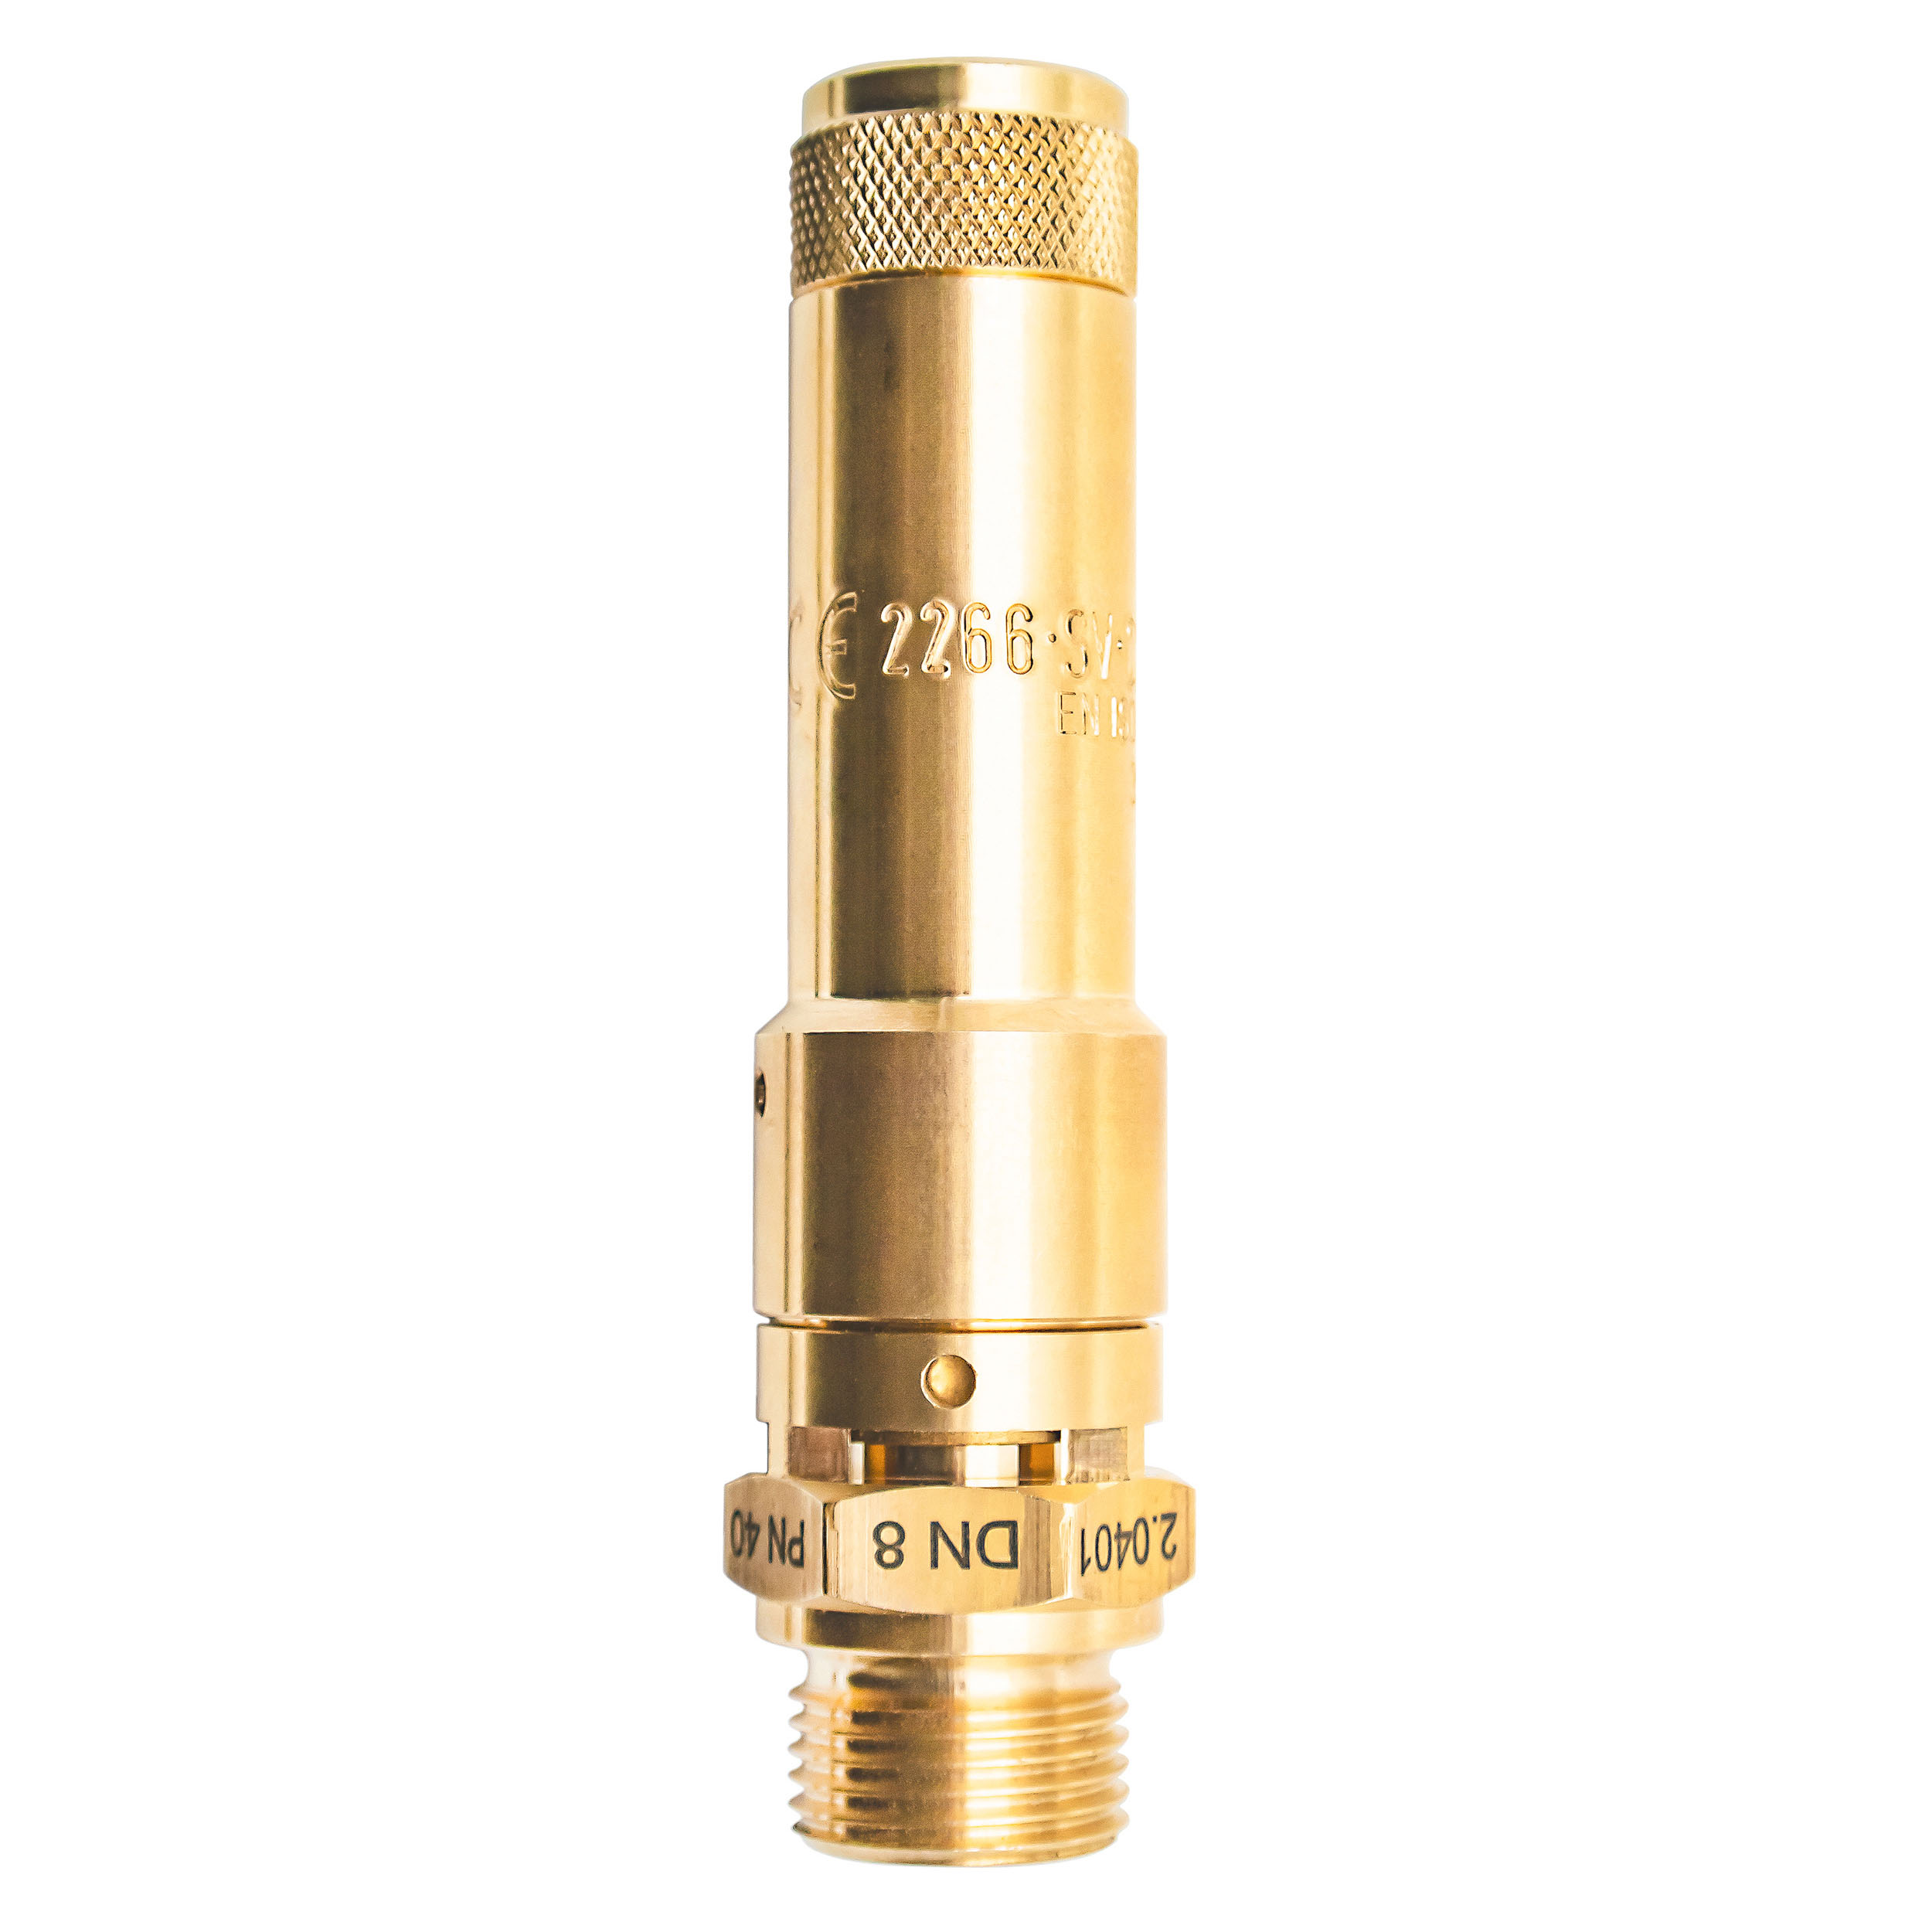 Component-tested safety valve DN 8, G¼, pressure: 3.1-5 bar